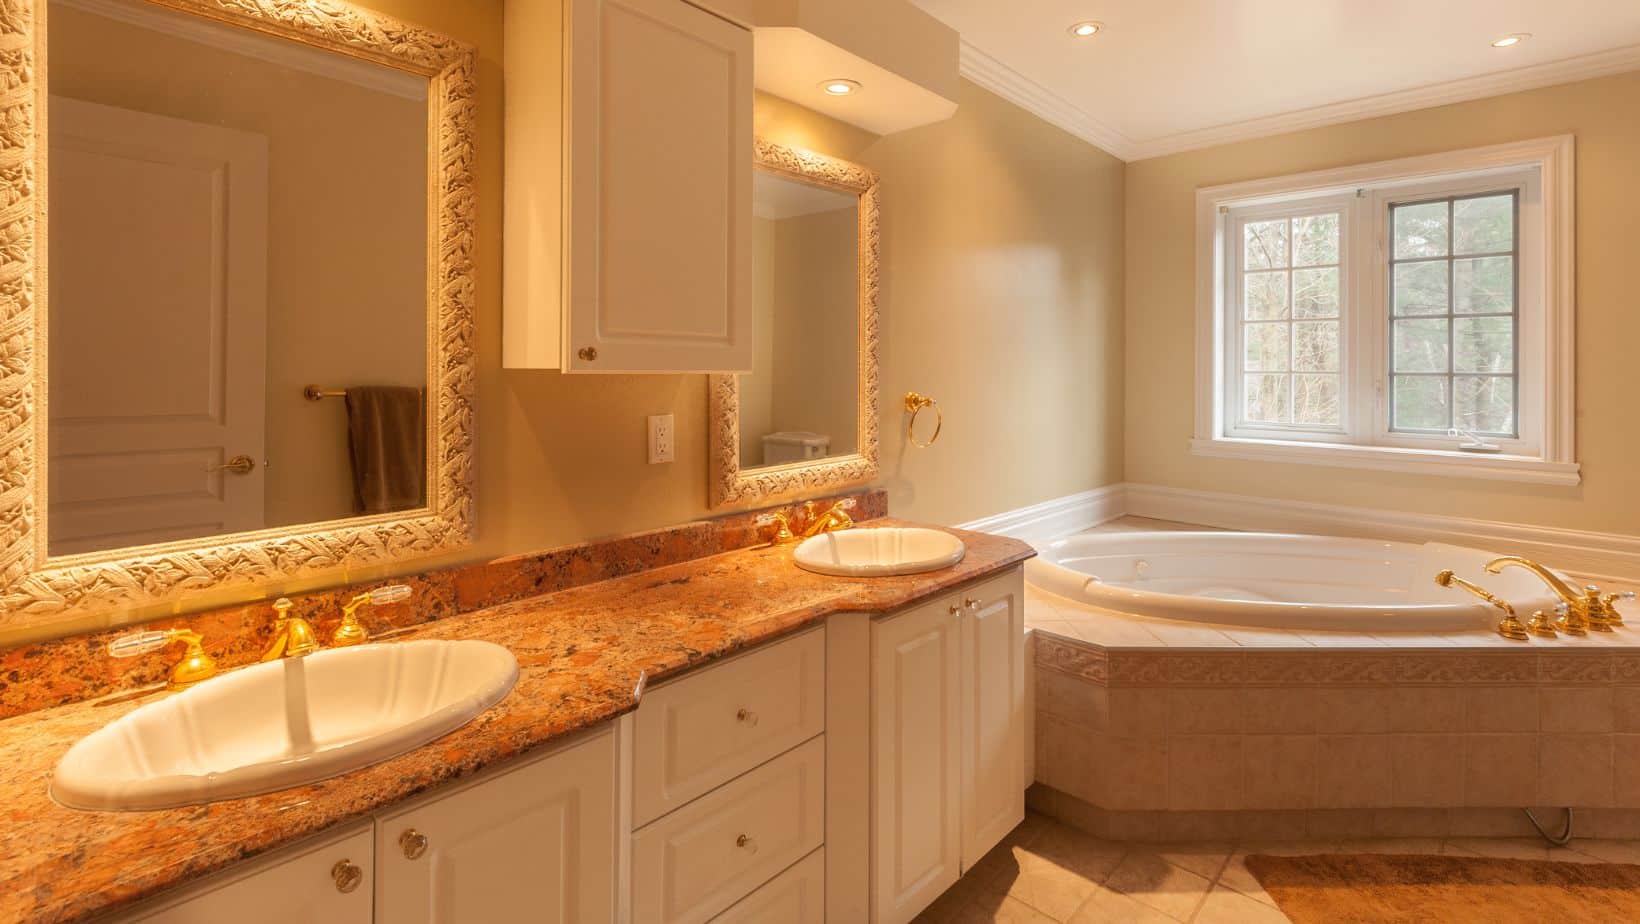 Luxury bathroom with cream double sink bathroom cabinets, and bath tub